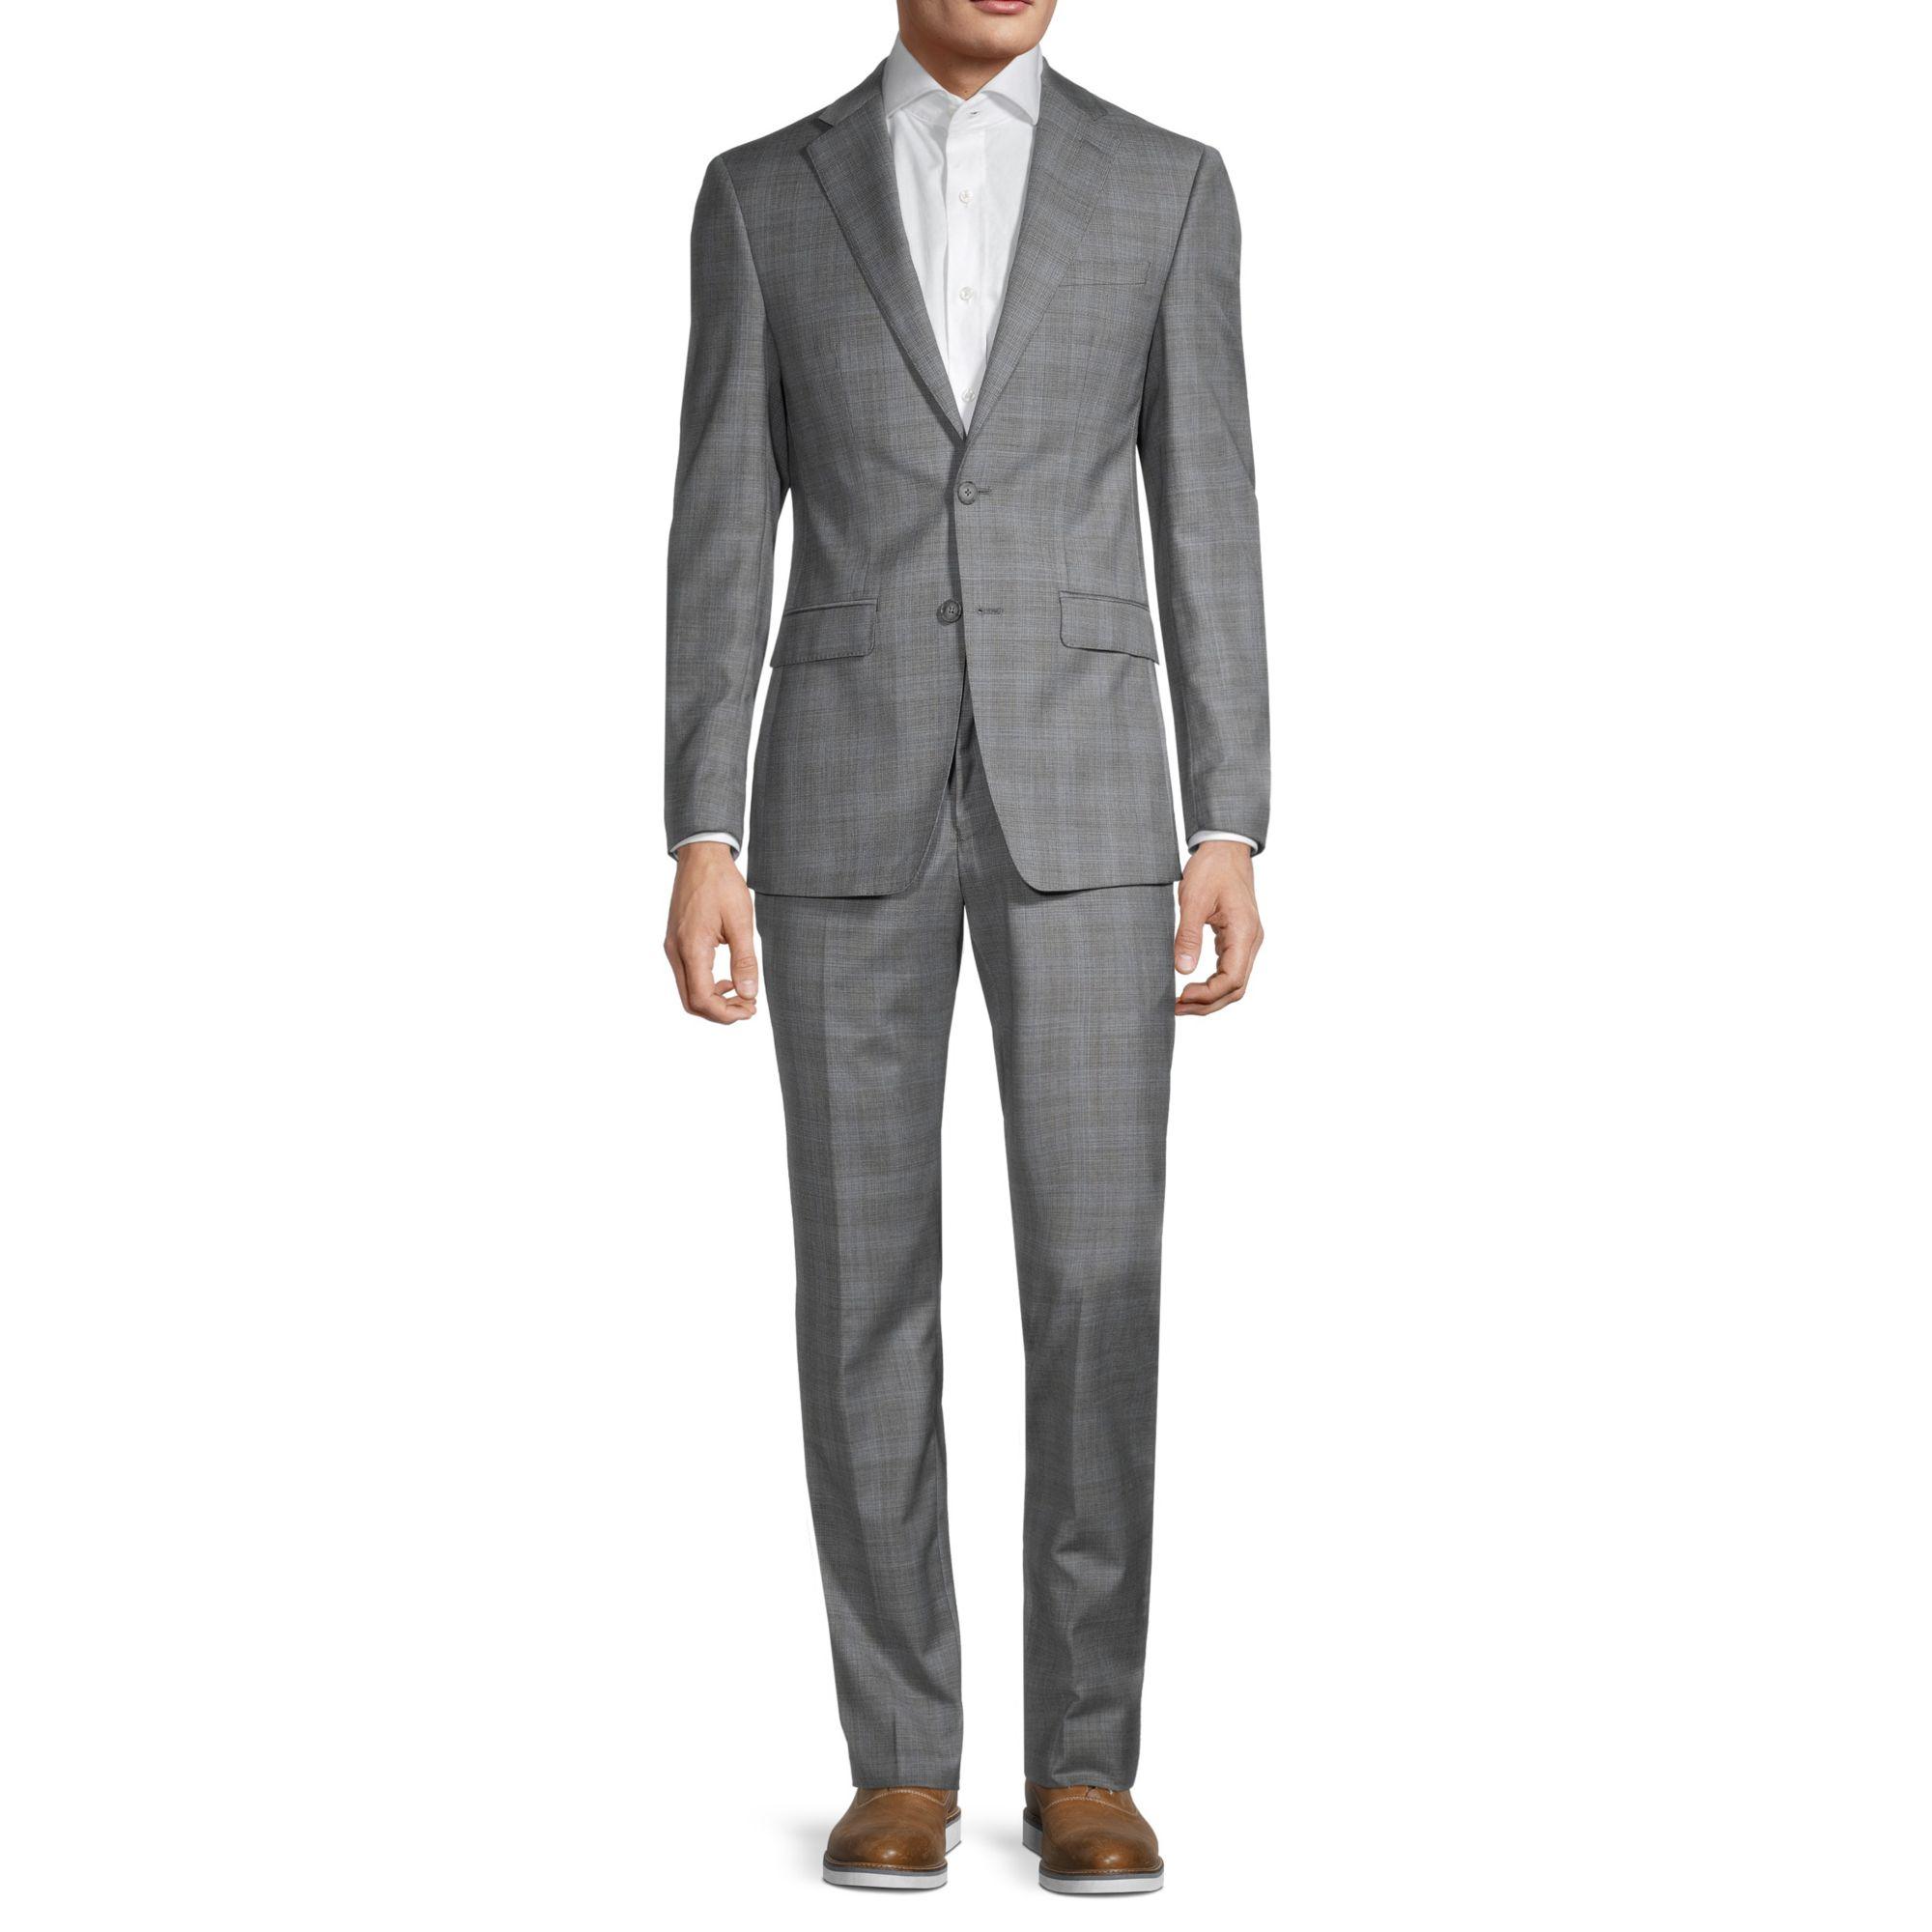 Calvin Klein Slim-fit Plaid Wool-blend Suit in Gray for Men - Lyst